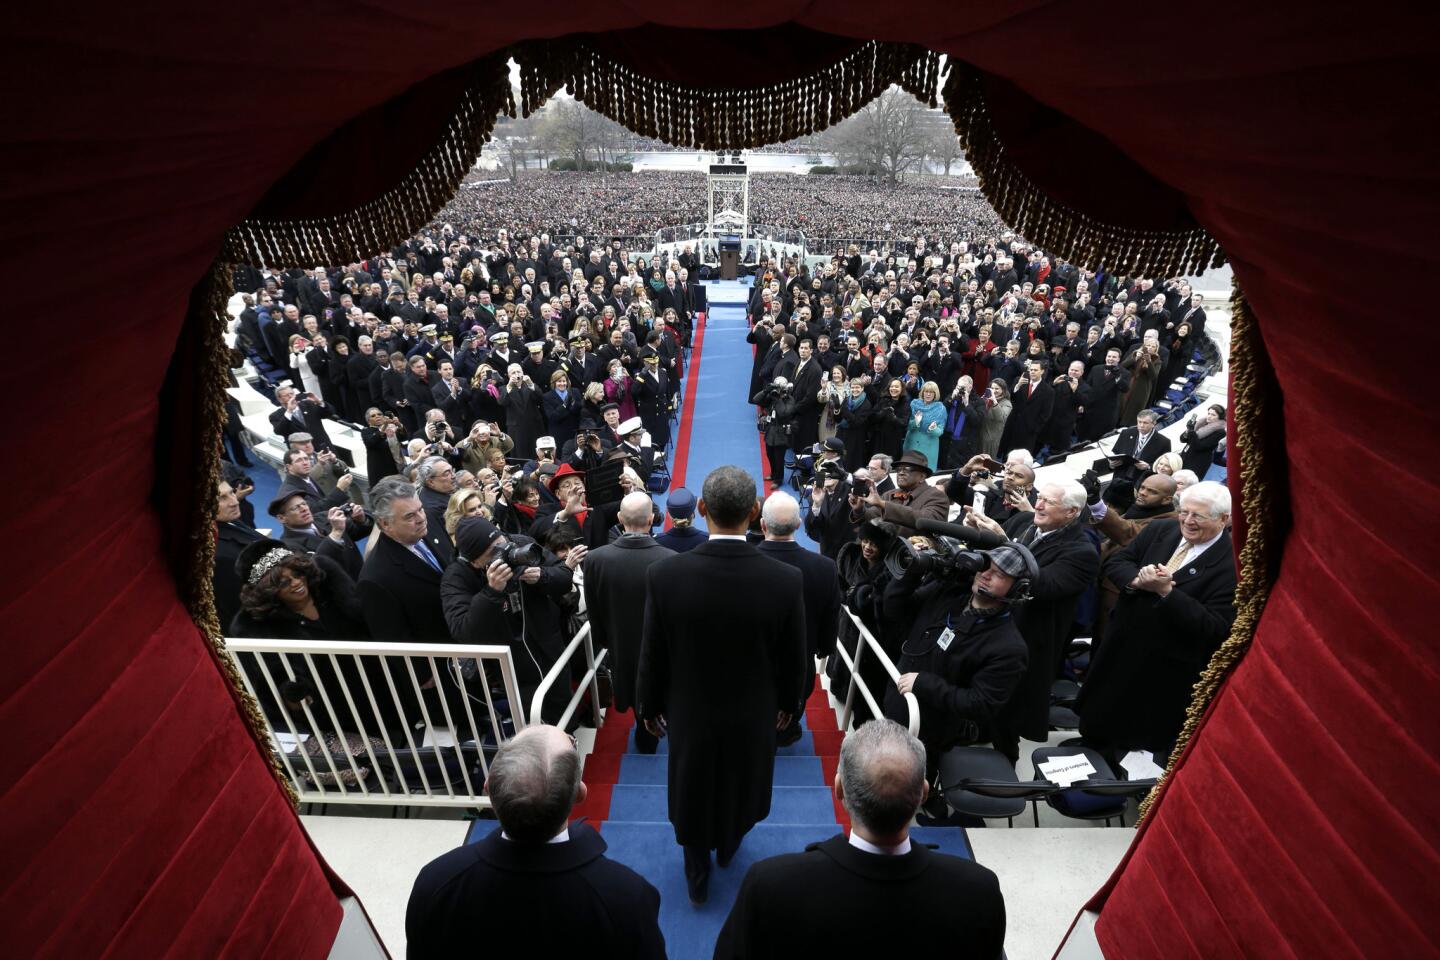 Obama's second inauguration